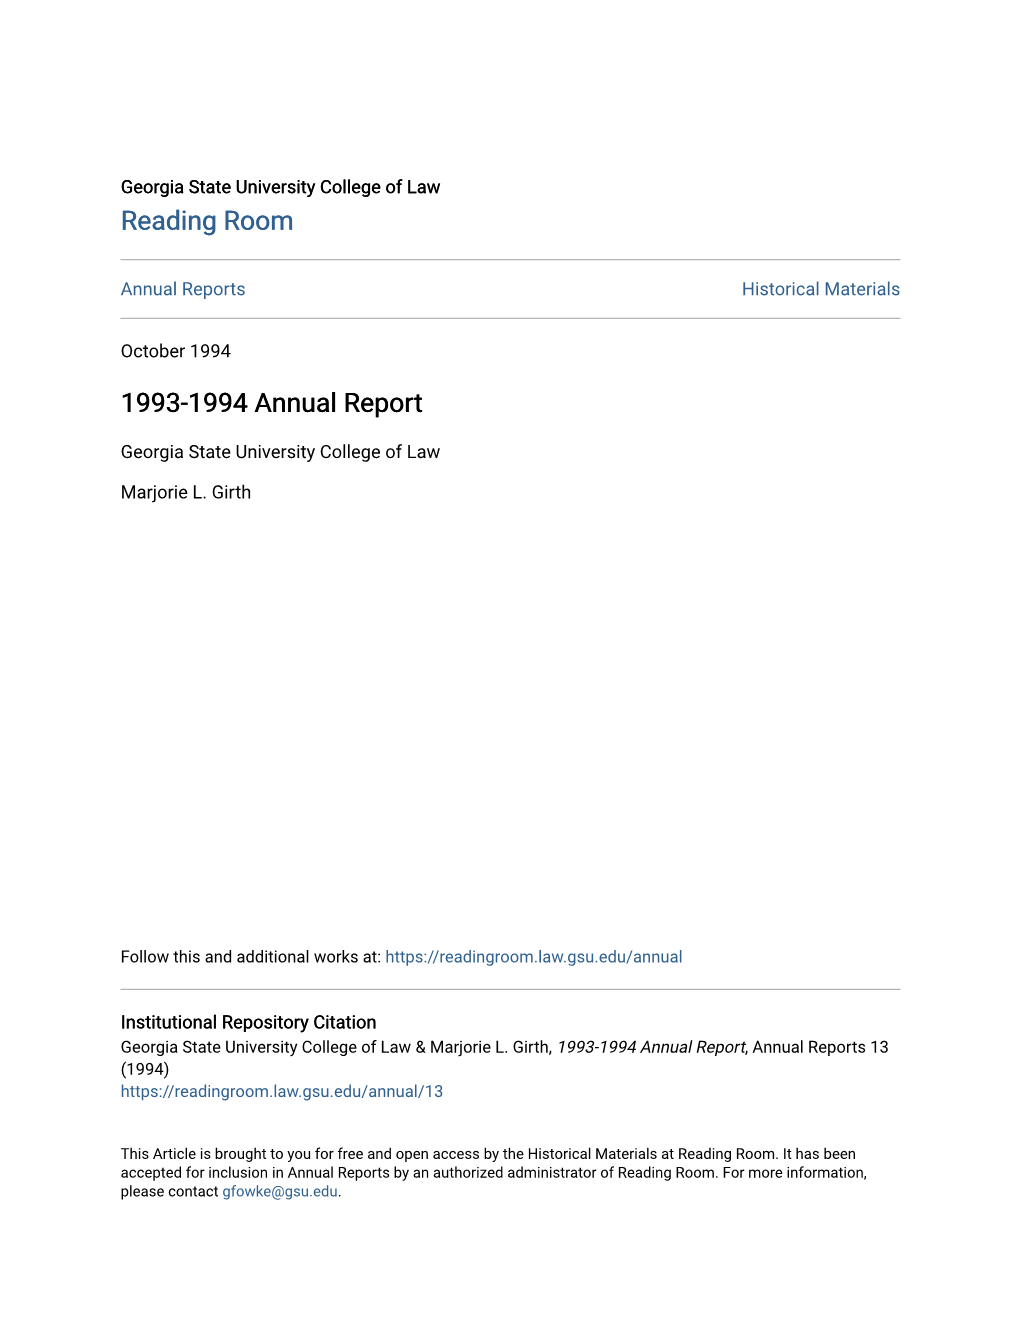 1993-1994 Annual Report